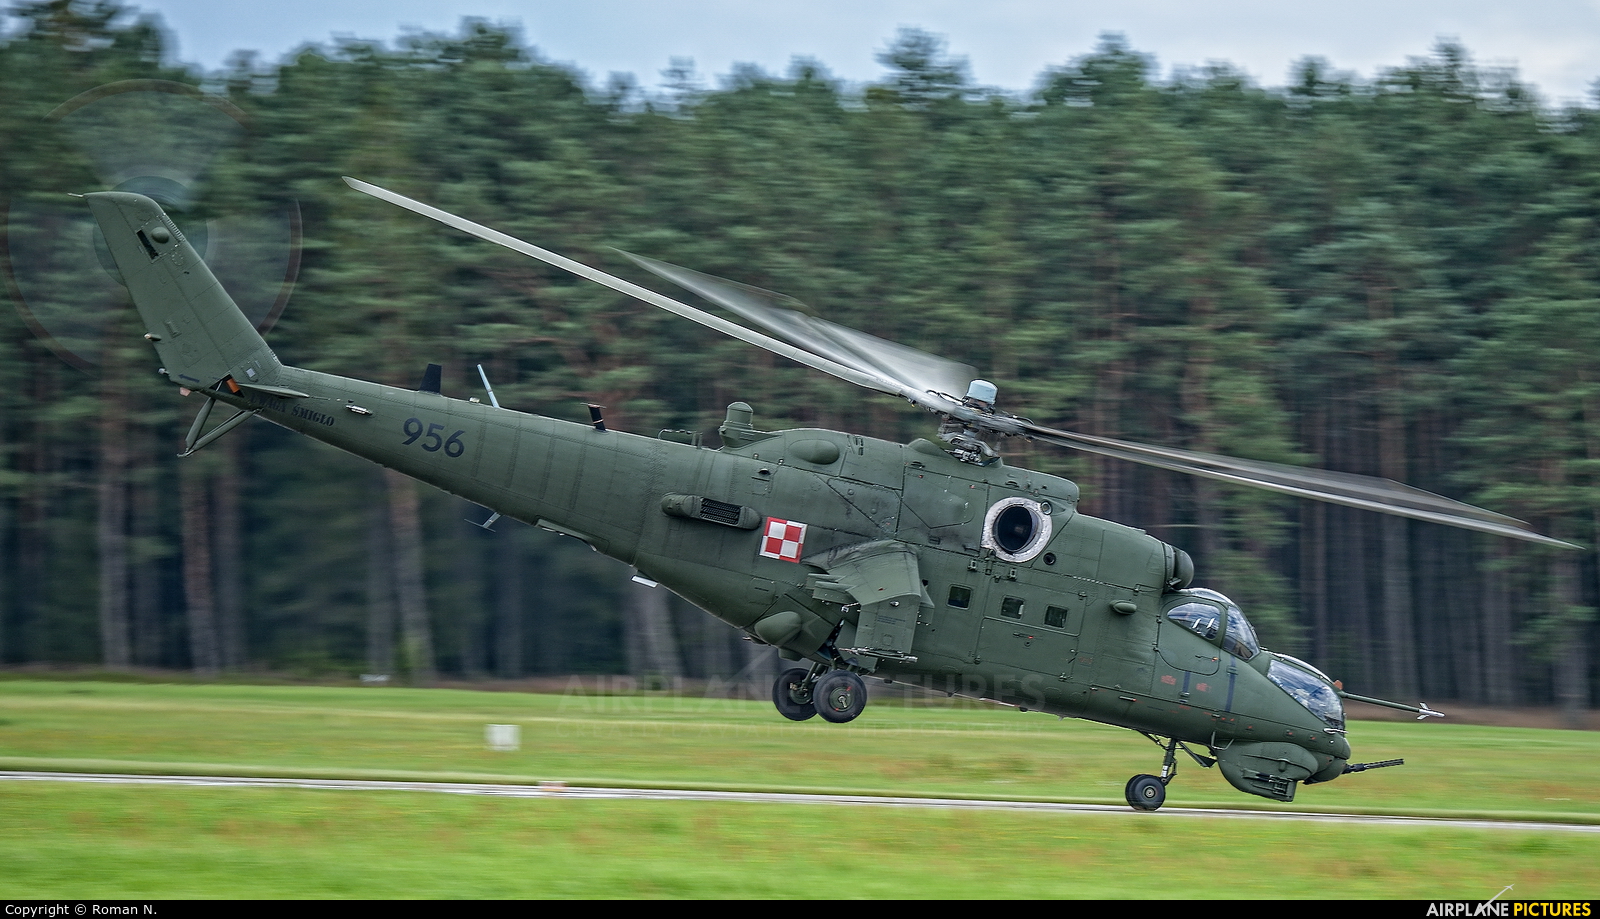 Poland - Army 956 aircraft at Siemirowice